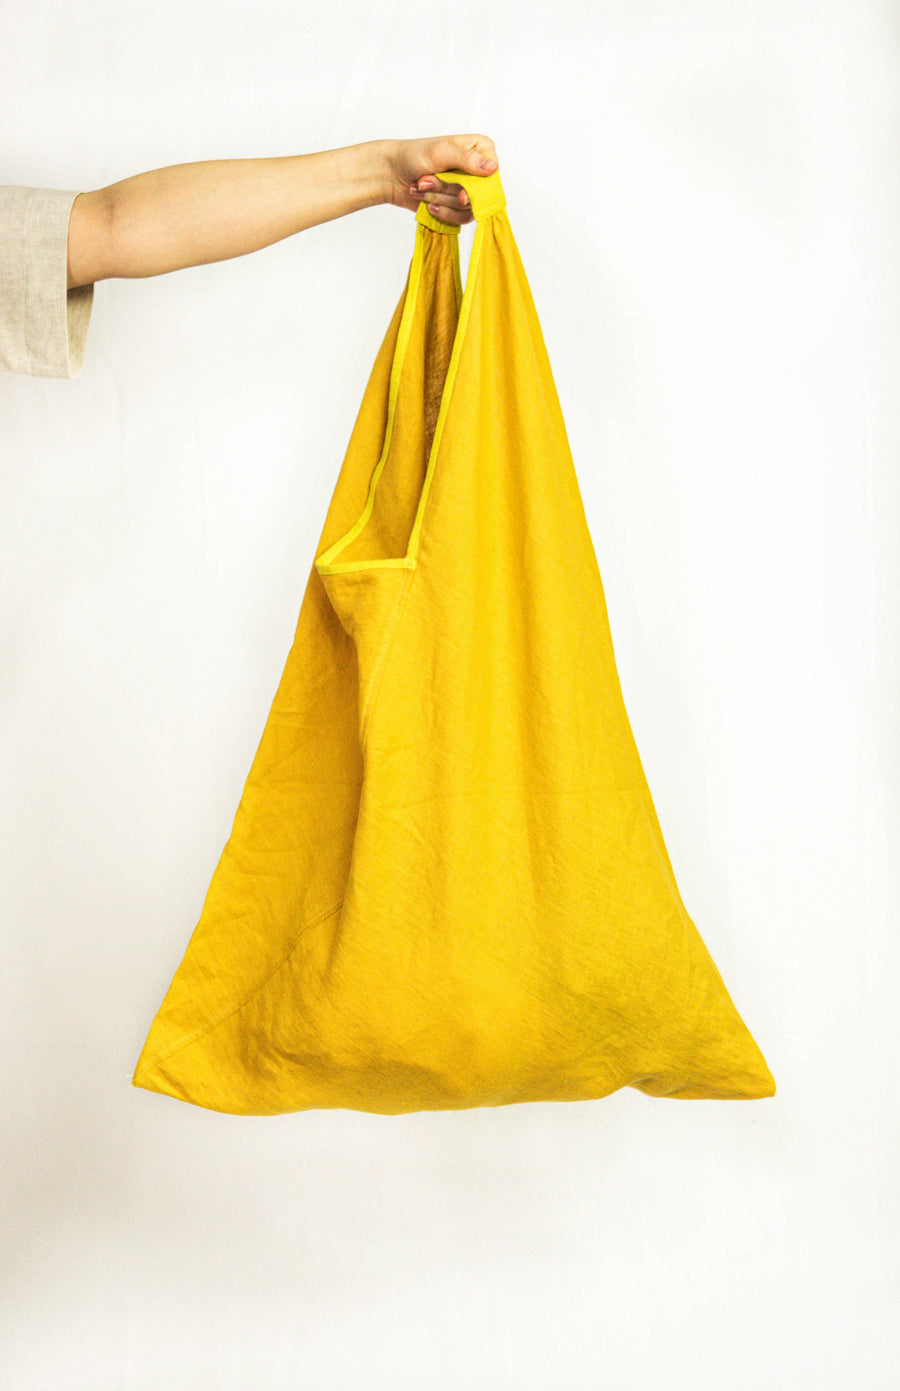 Dark Sea Blue linen triangle bag - Linen Couture Boutique